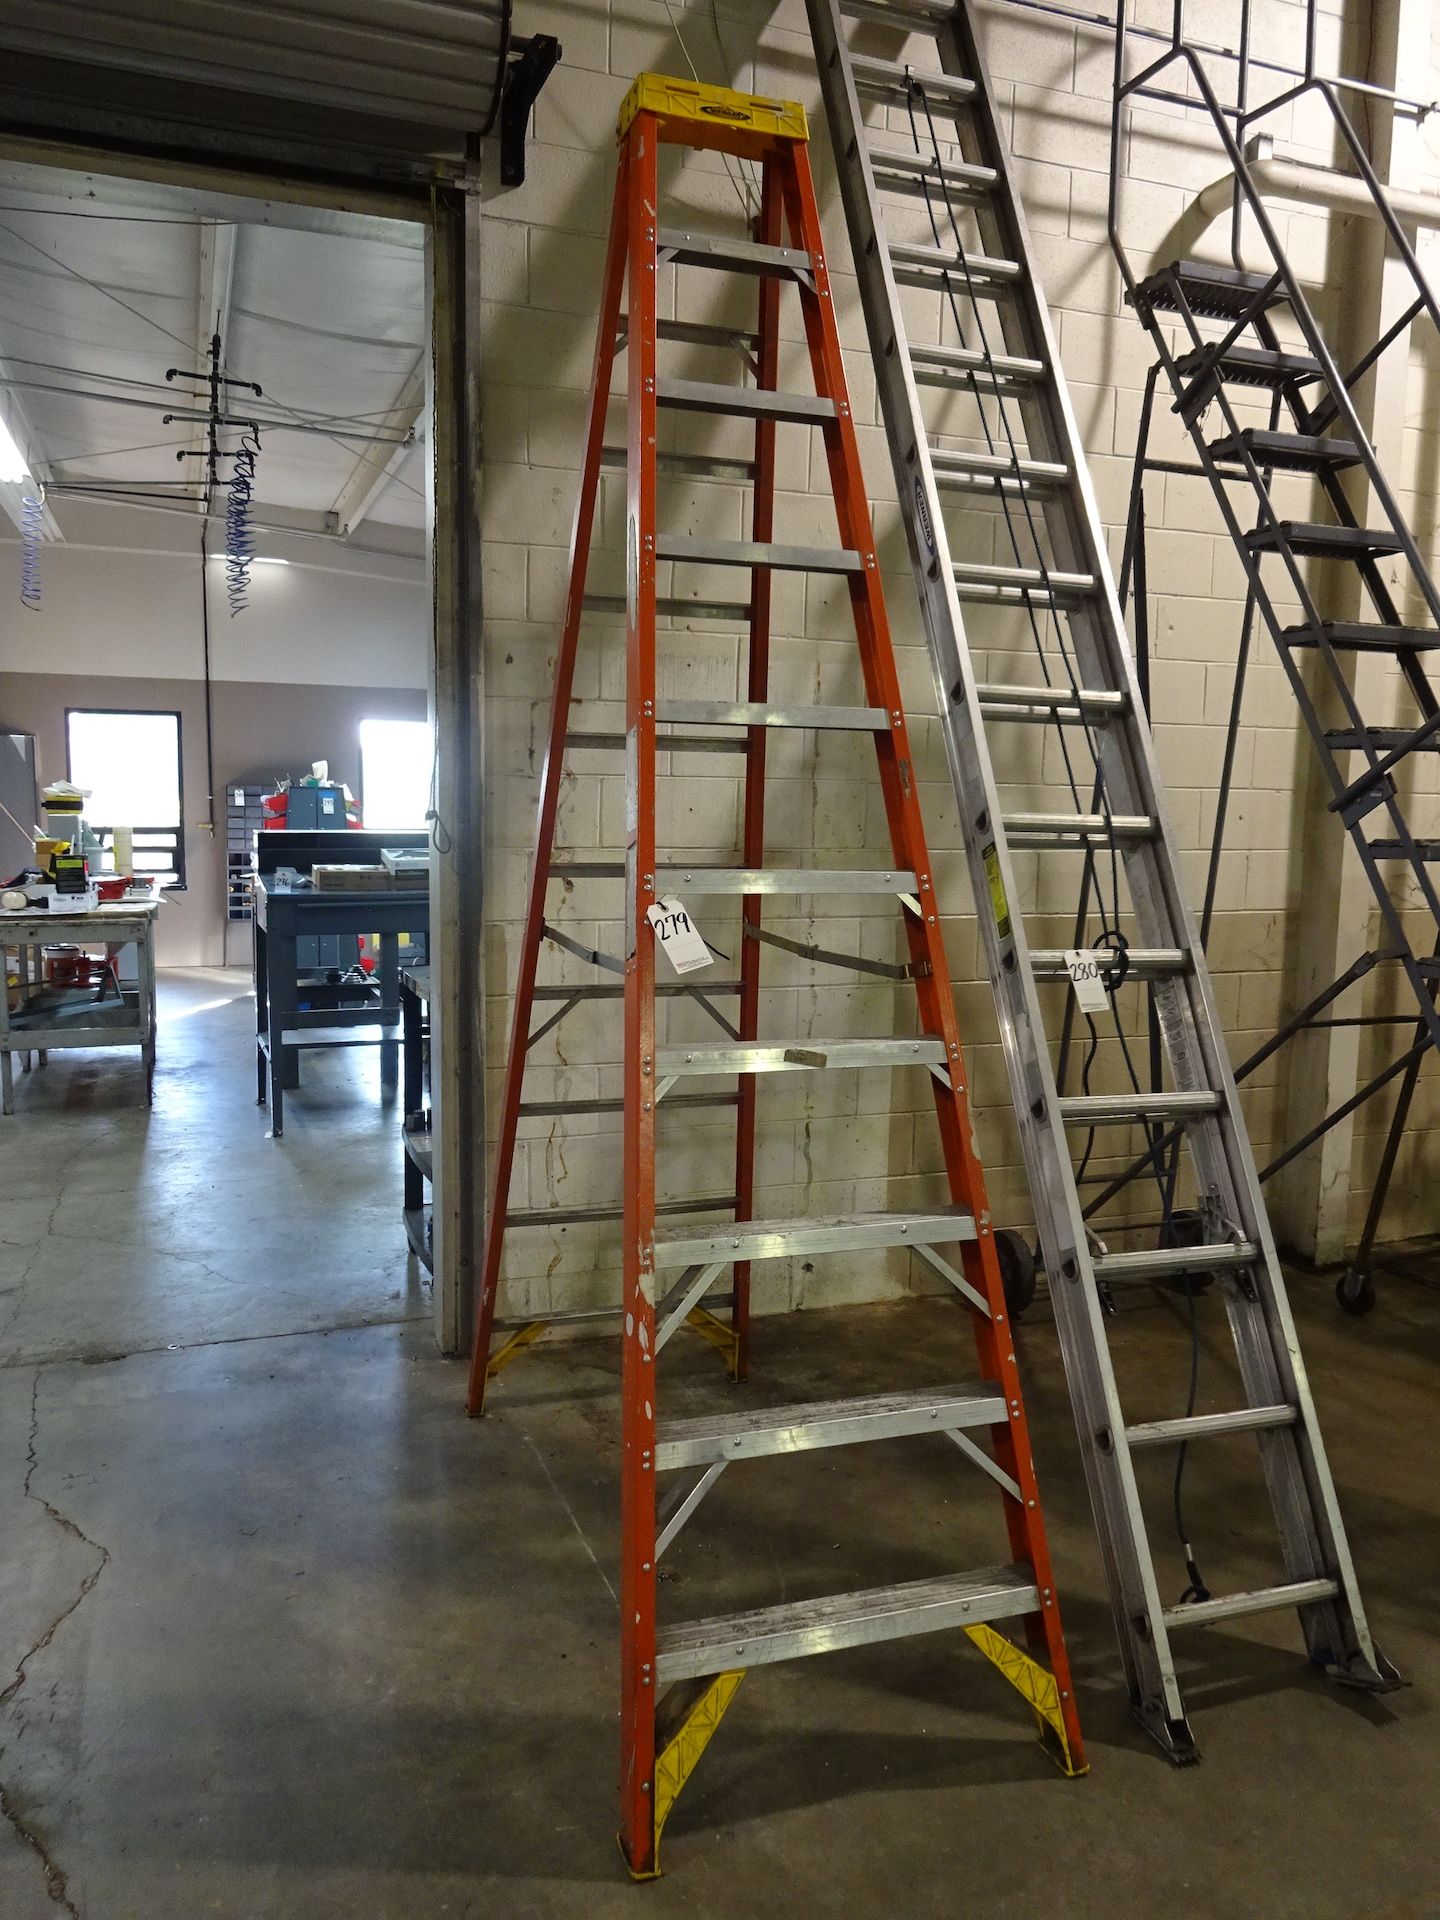 10 ft. Fiberglass Step Ladder